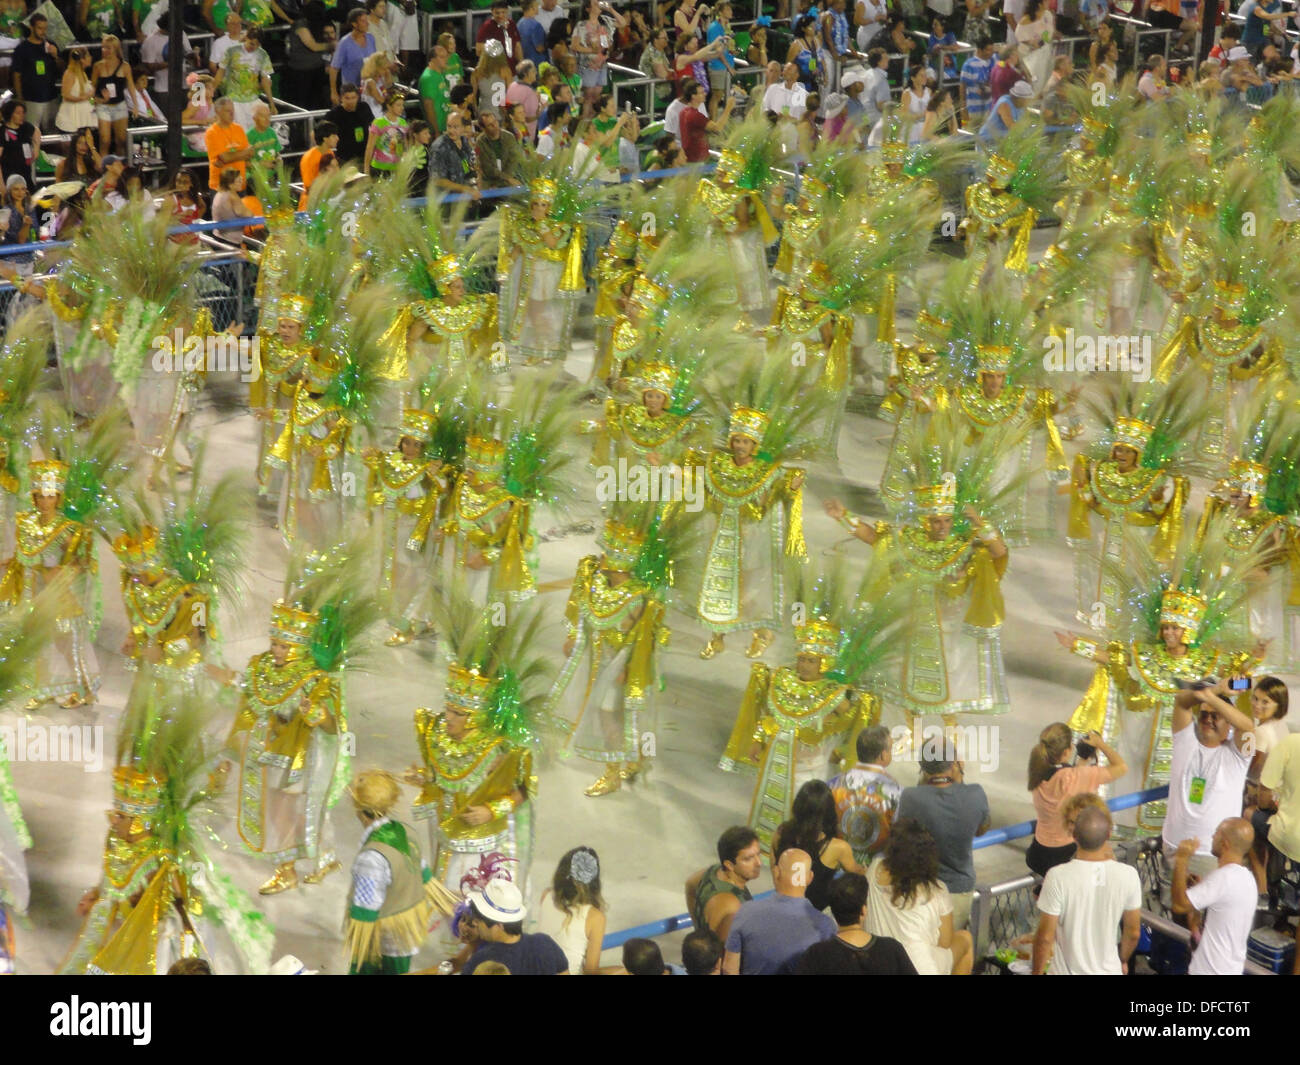 Carnival floats and dancers at the Sambadromo, Rio de Janeiro Stock Photo